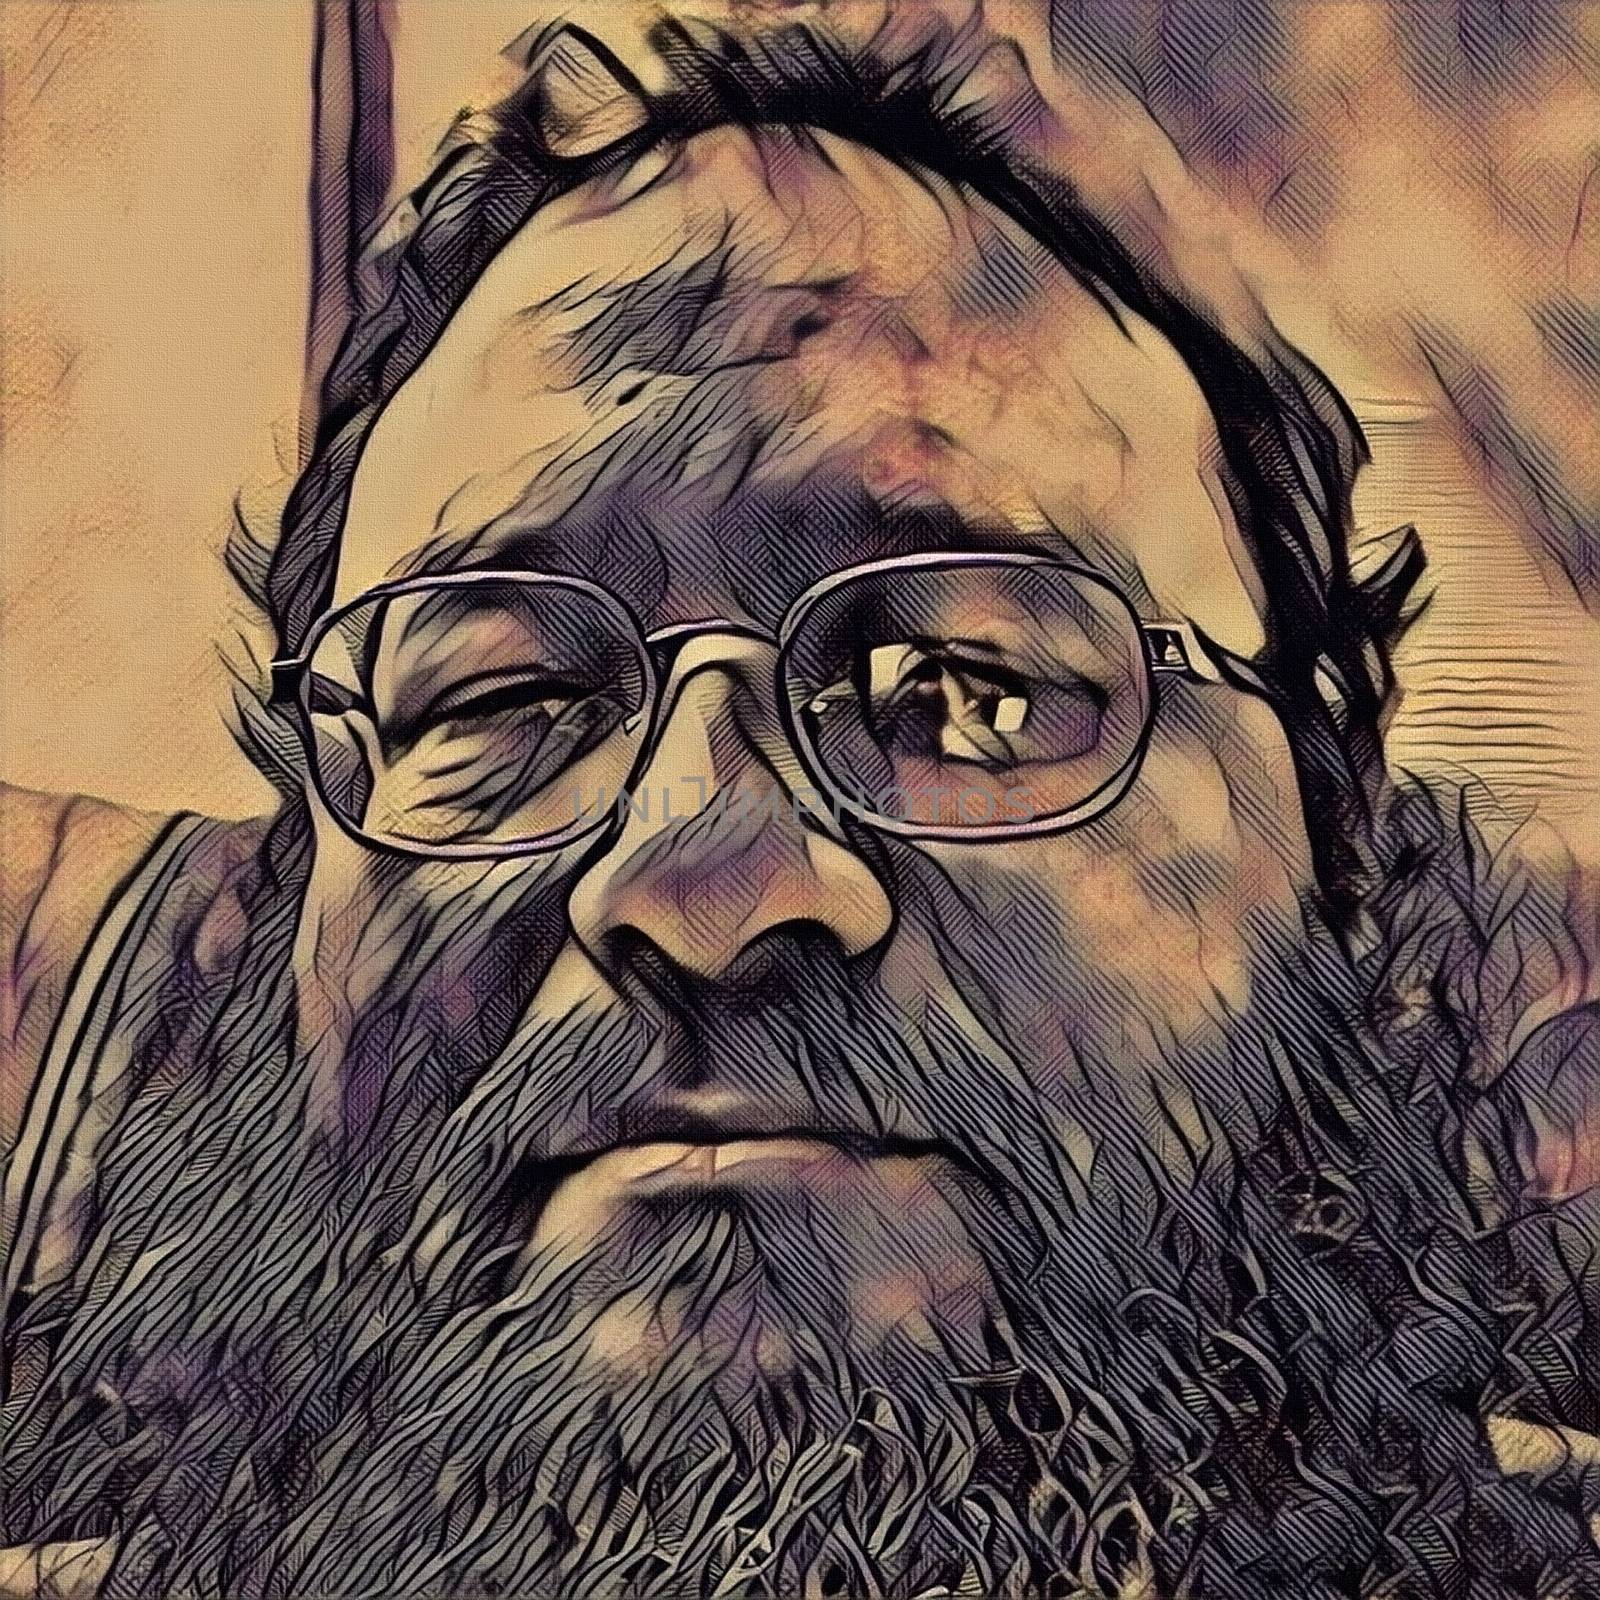 Pencil drawings. Bearded wise man wearing glasses. 3D rendering